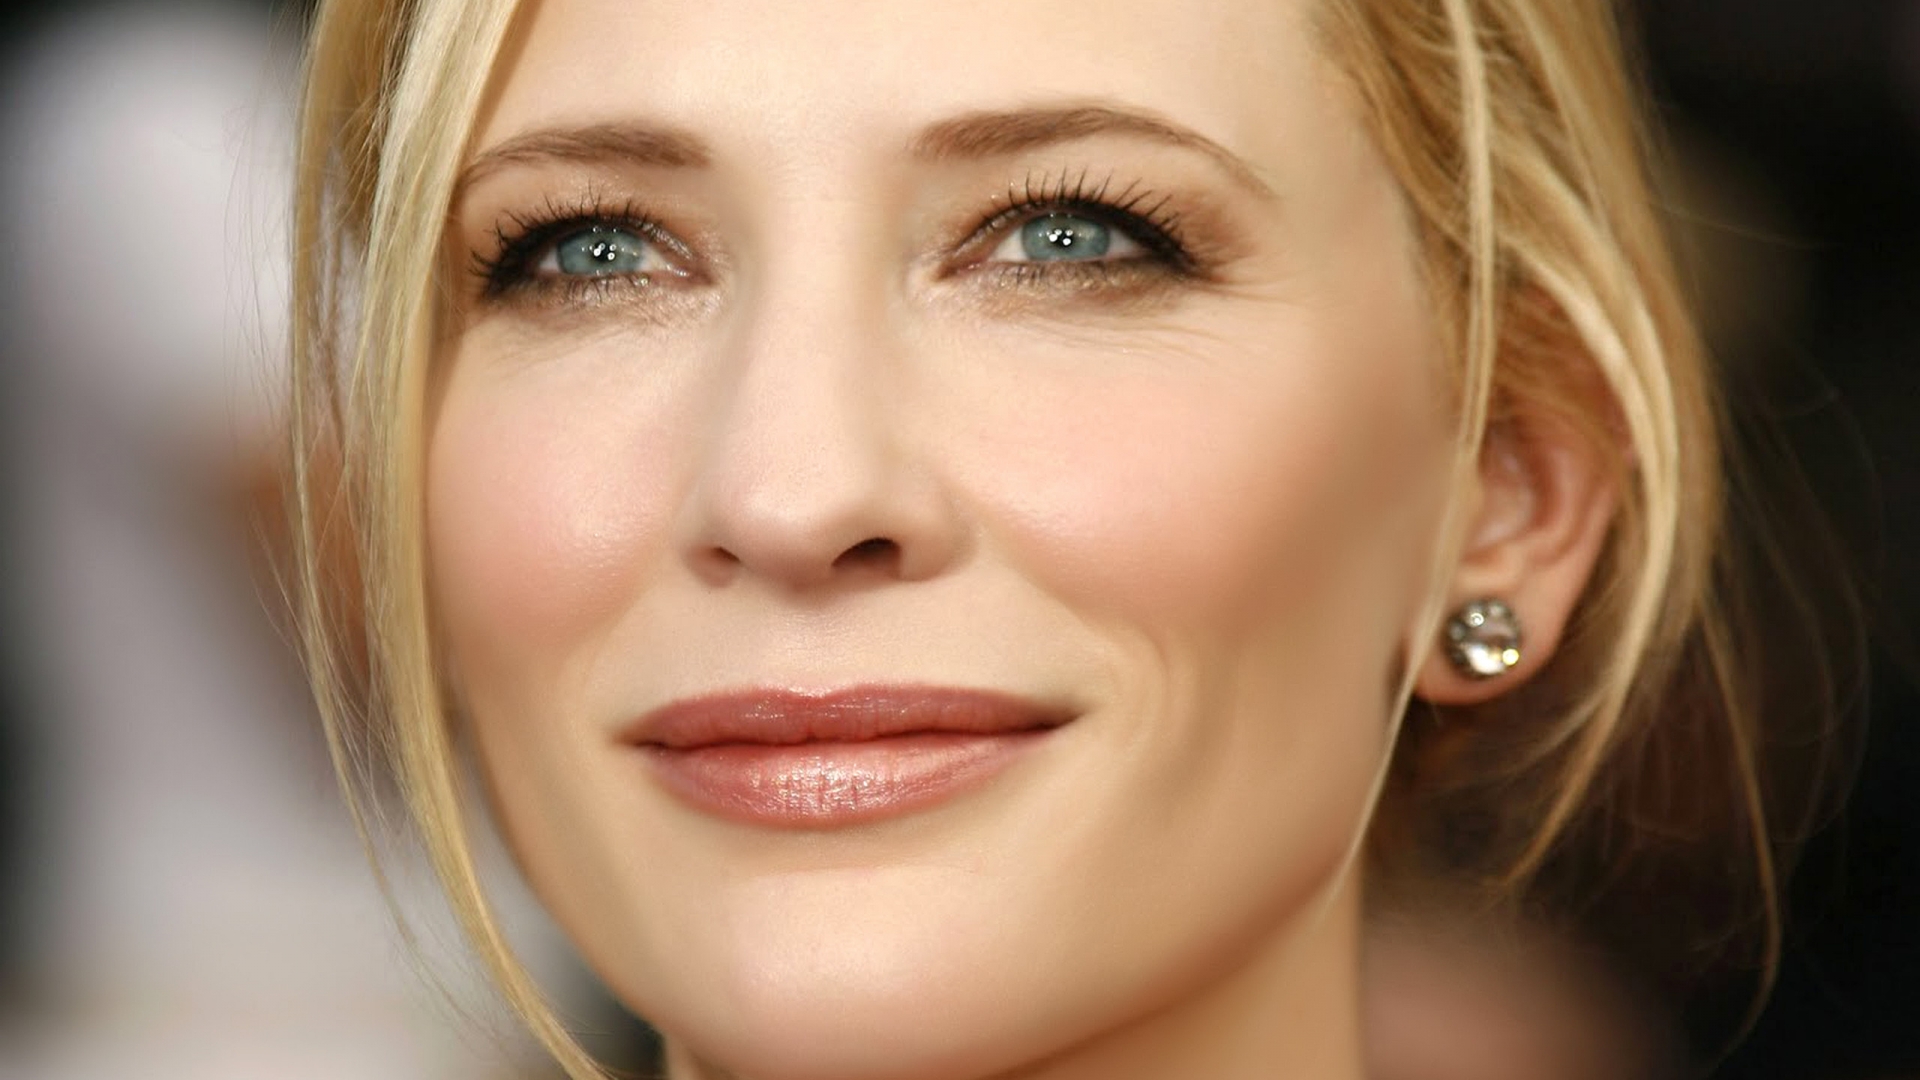 Cate Blanchett Look for 1920 x 1080 HDTV 1080p resolution